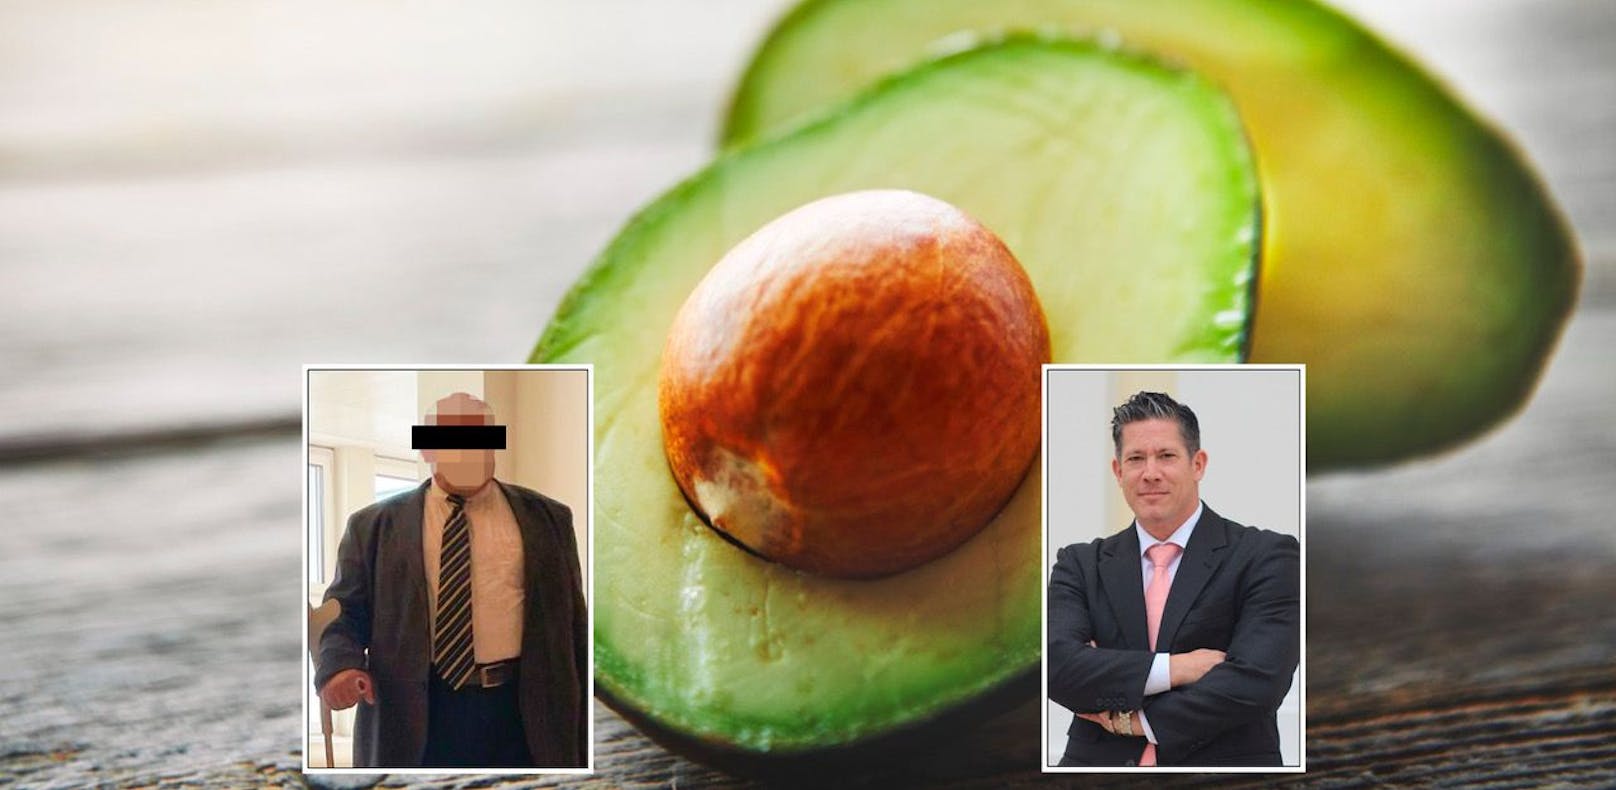 Freispruch im Avocado-Prozess in Wien